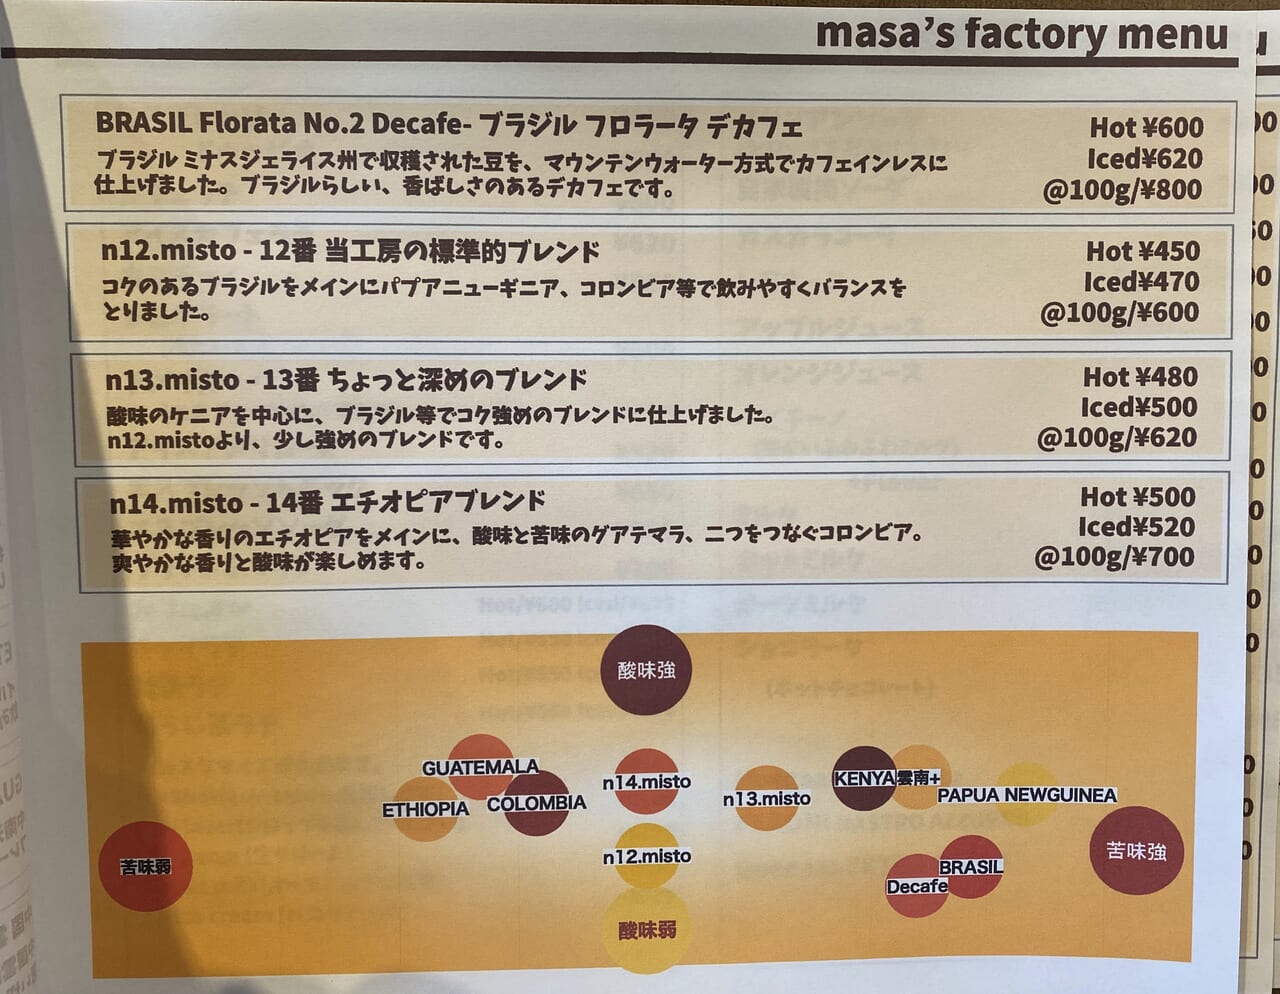 masa's factoryメニュー